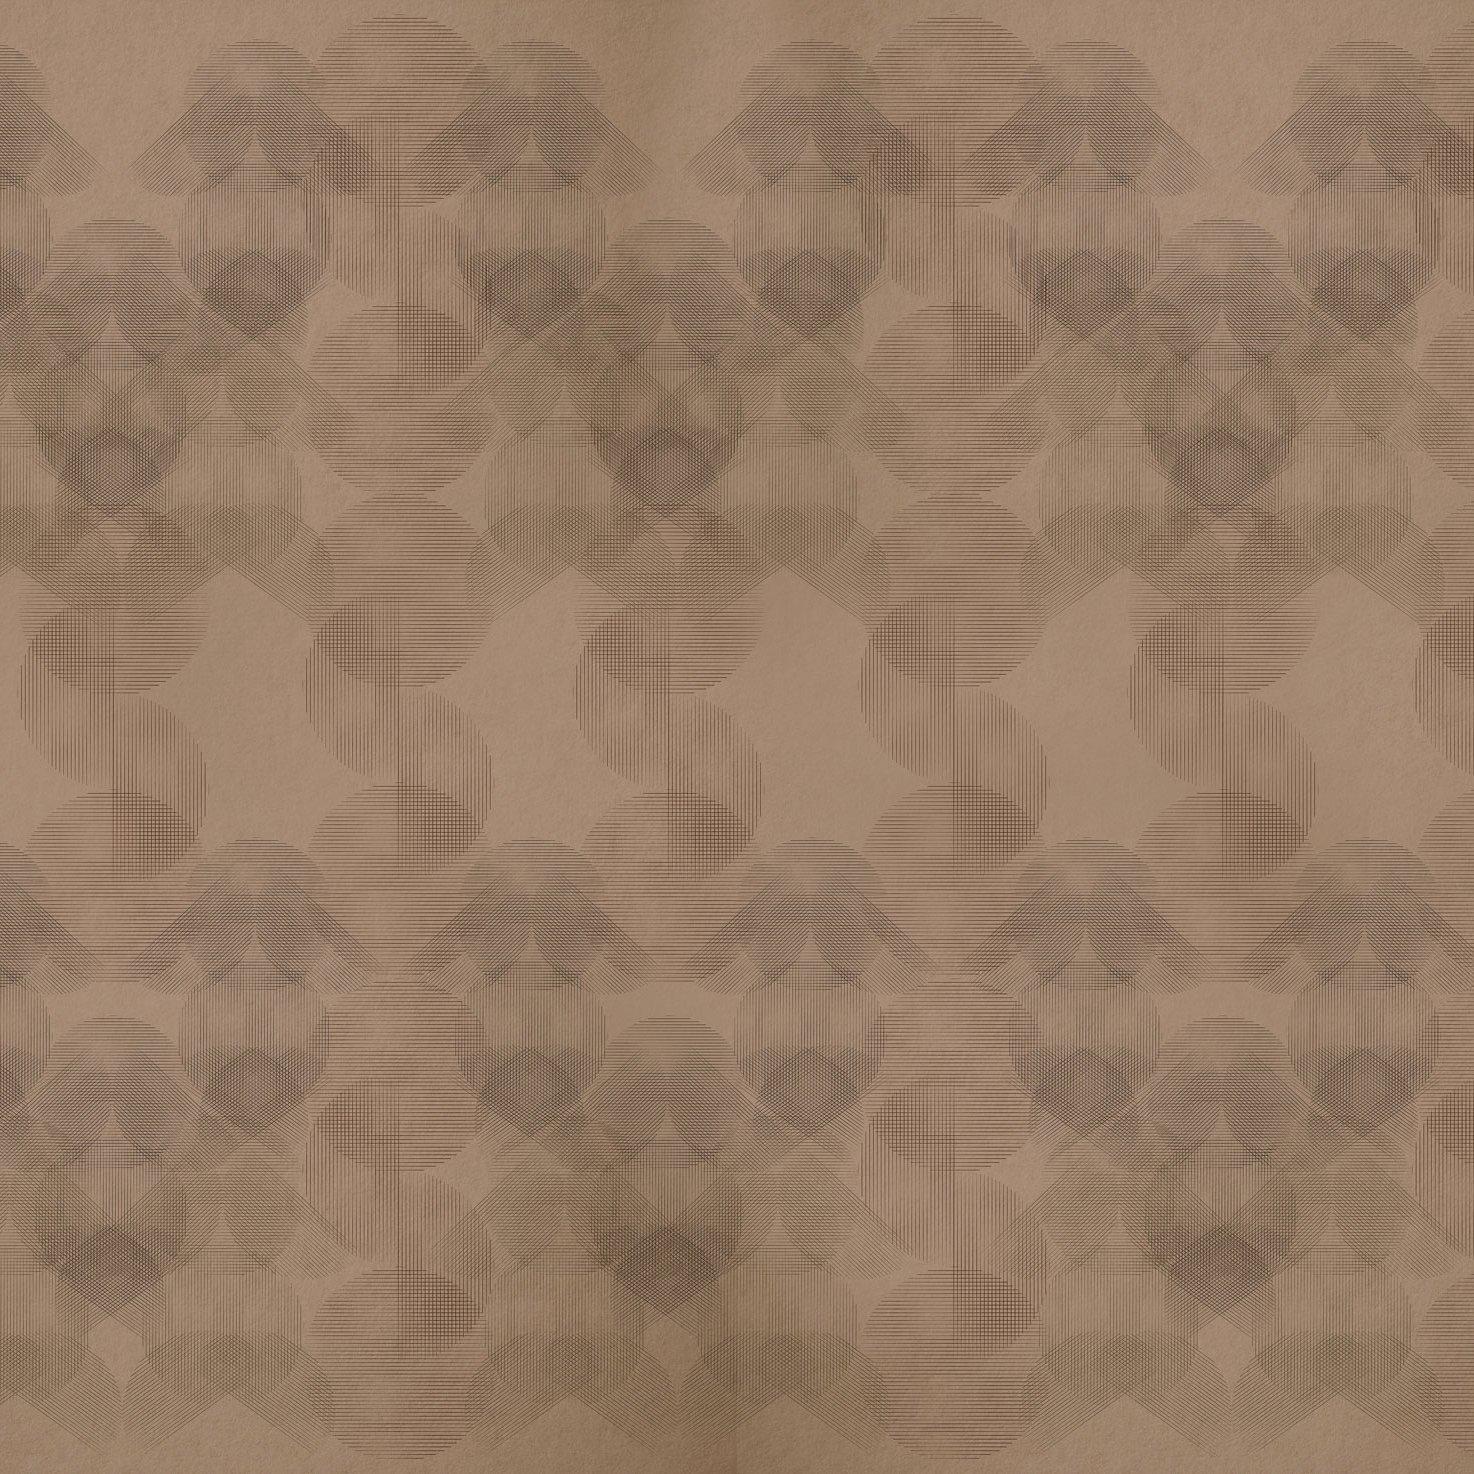 Stripes Ladybug-Digital Wallpaper-Tecnografica-Brown 1-70874-1A